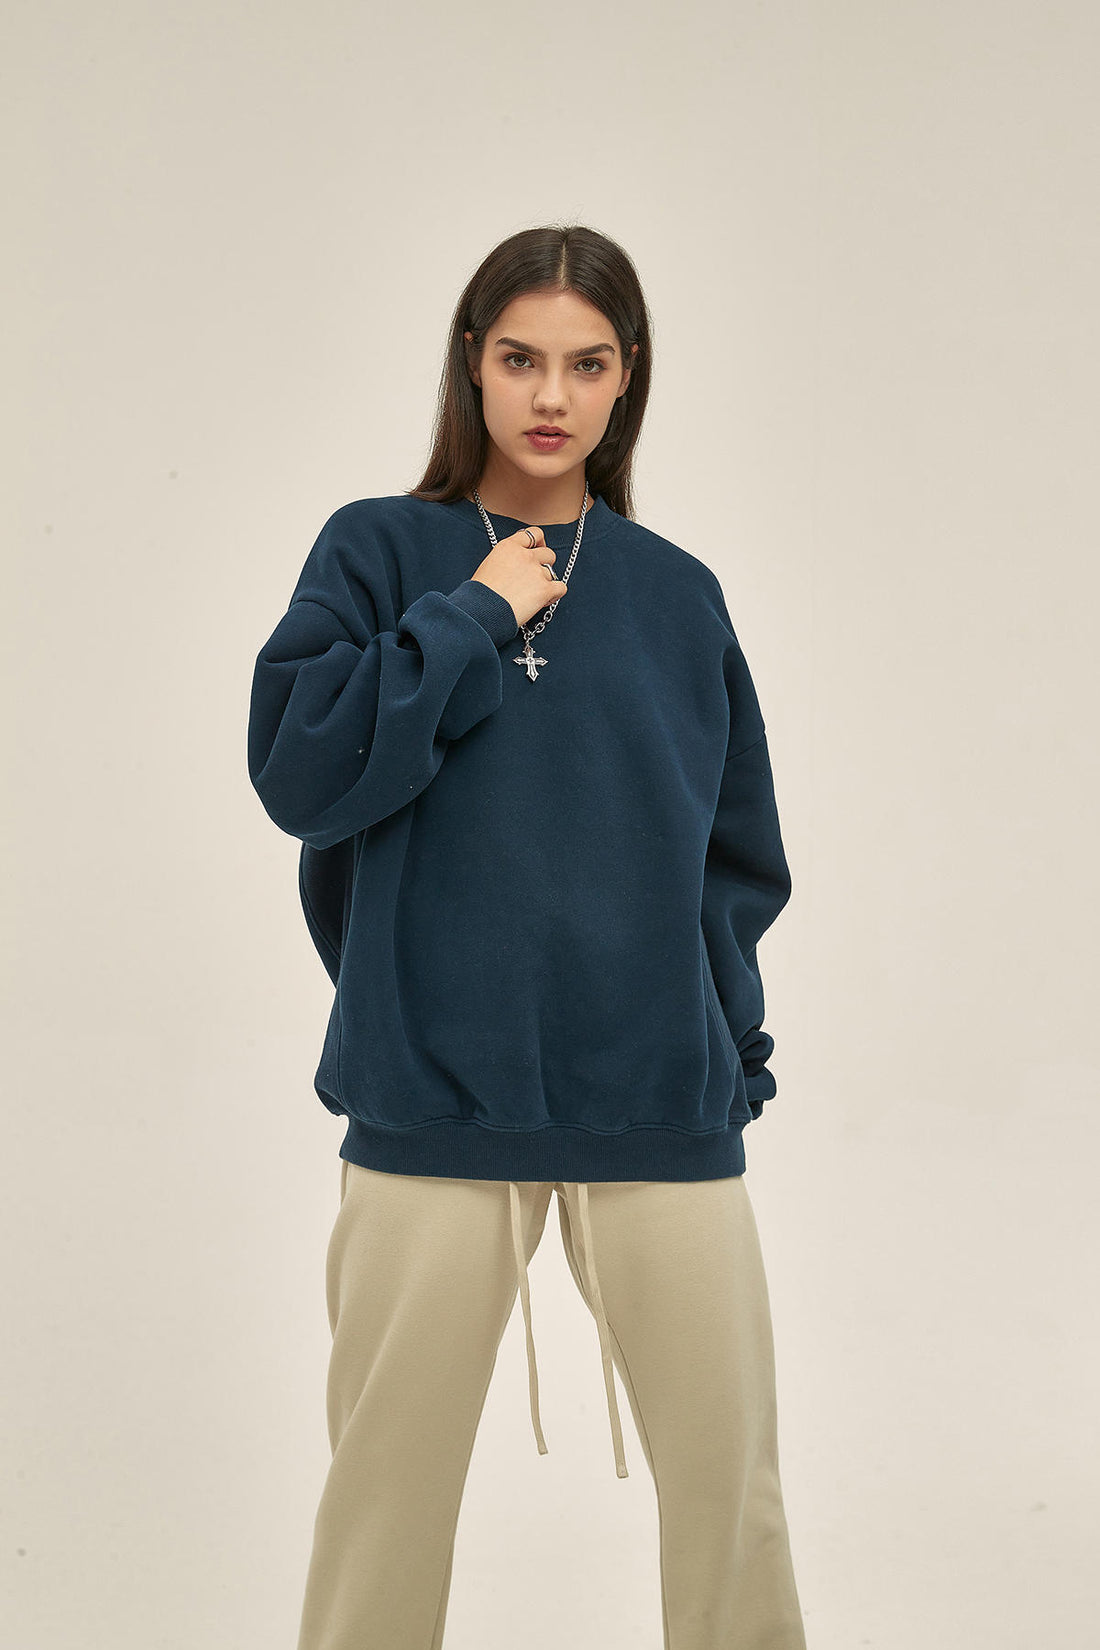 360G Loose Fleece Women Sweatshirt